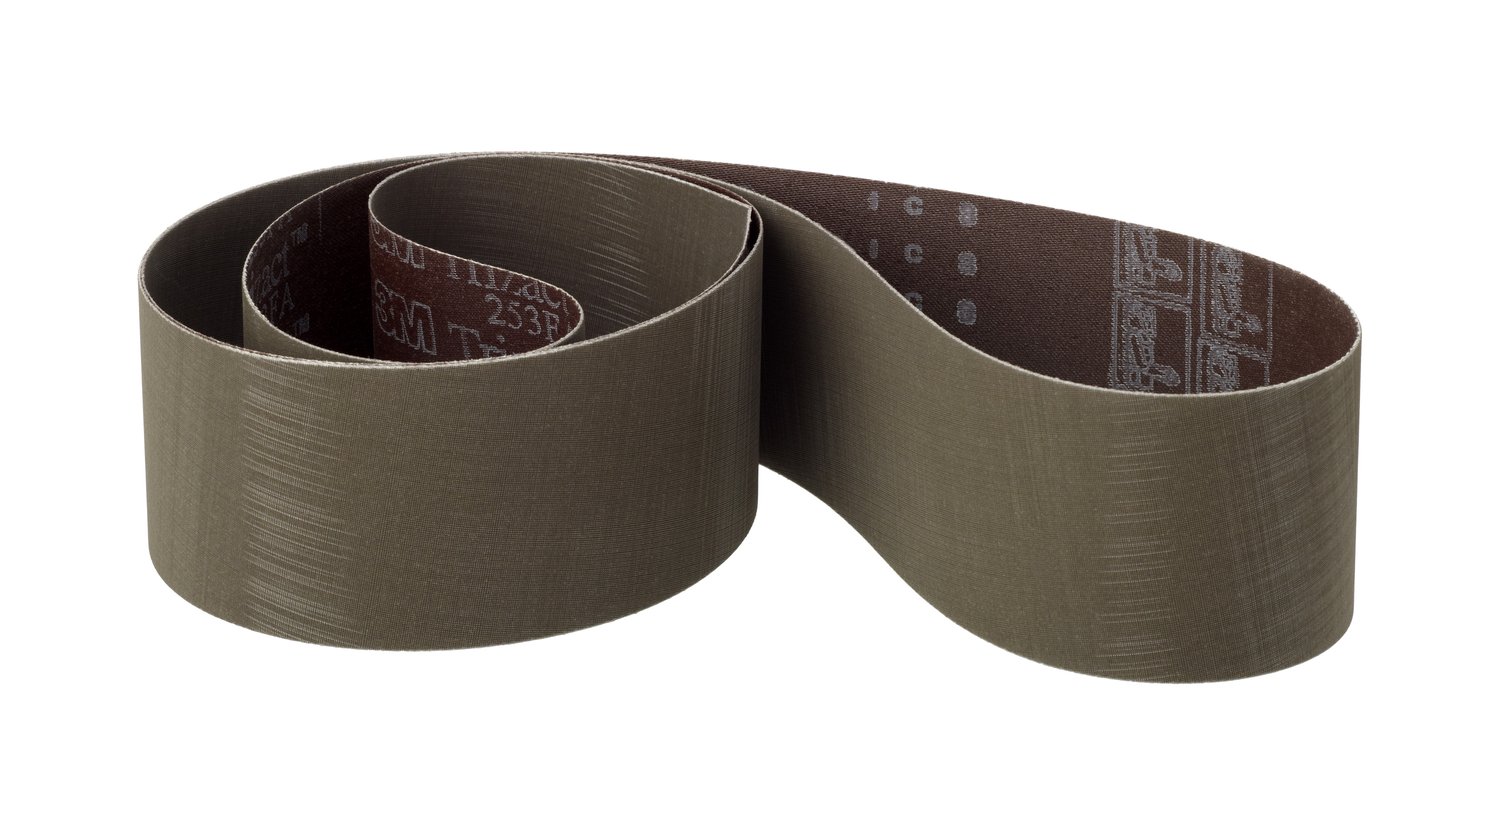 7010516245 - 3M Trizact Cloth Belt 253FA, A16 XF-weight, 6 in x 98 in, Film-lok,
Full-flex